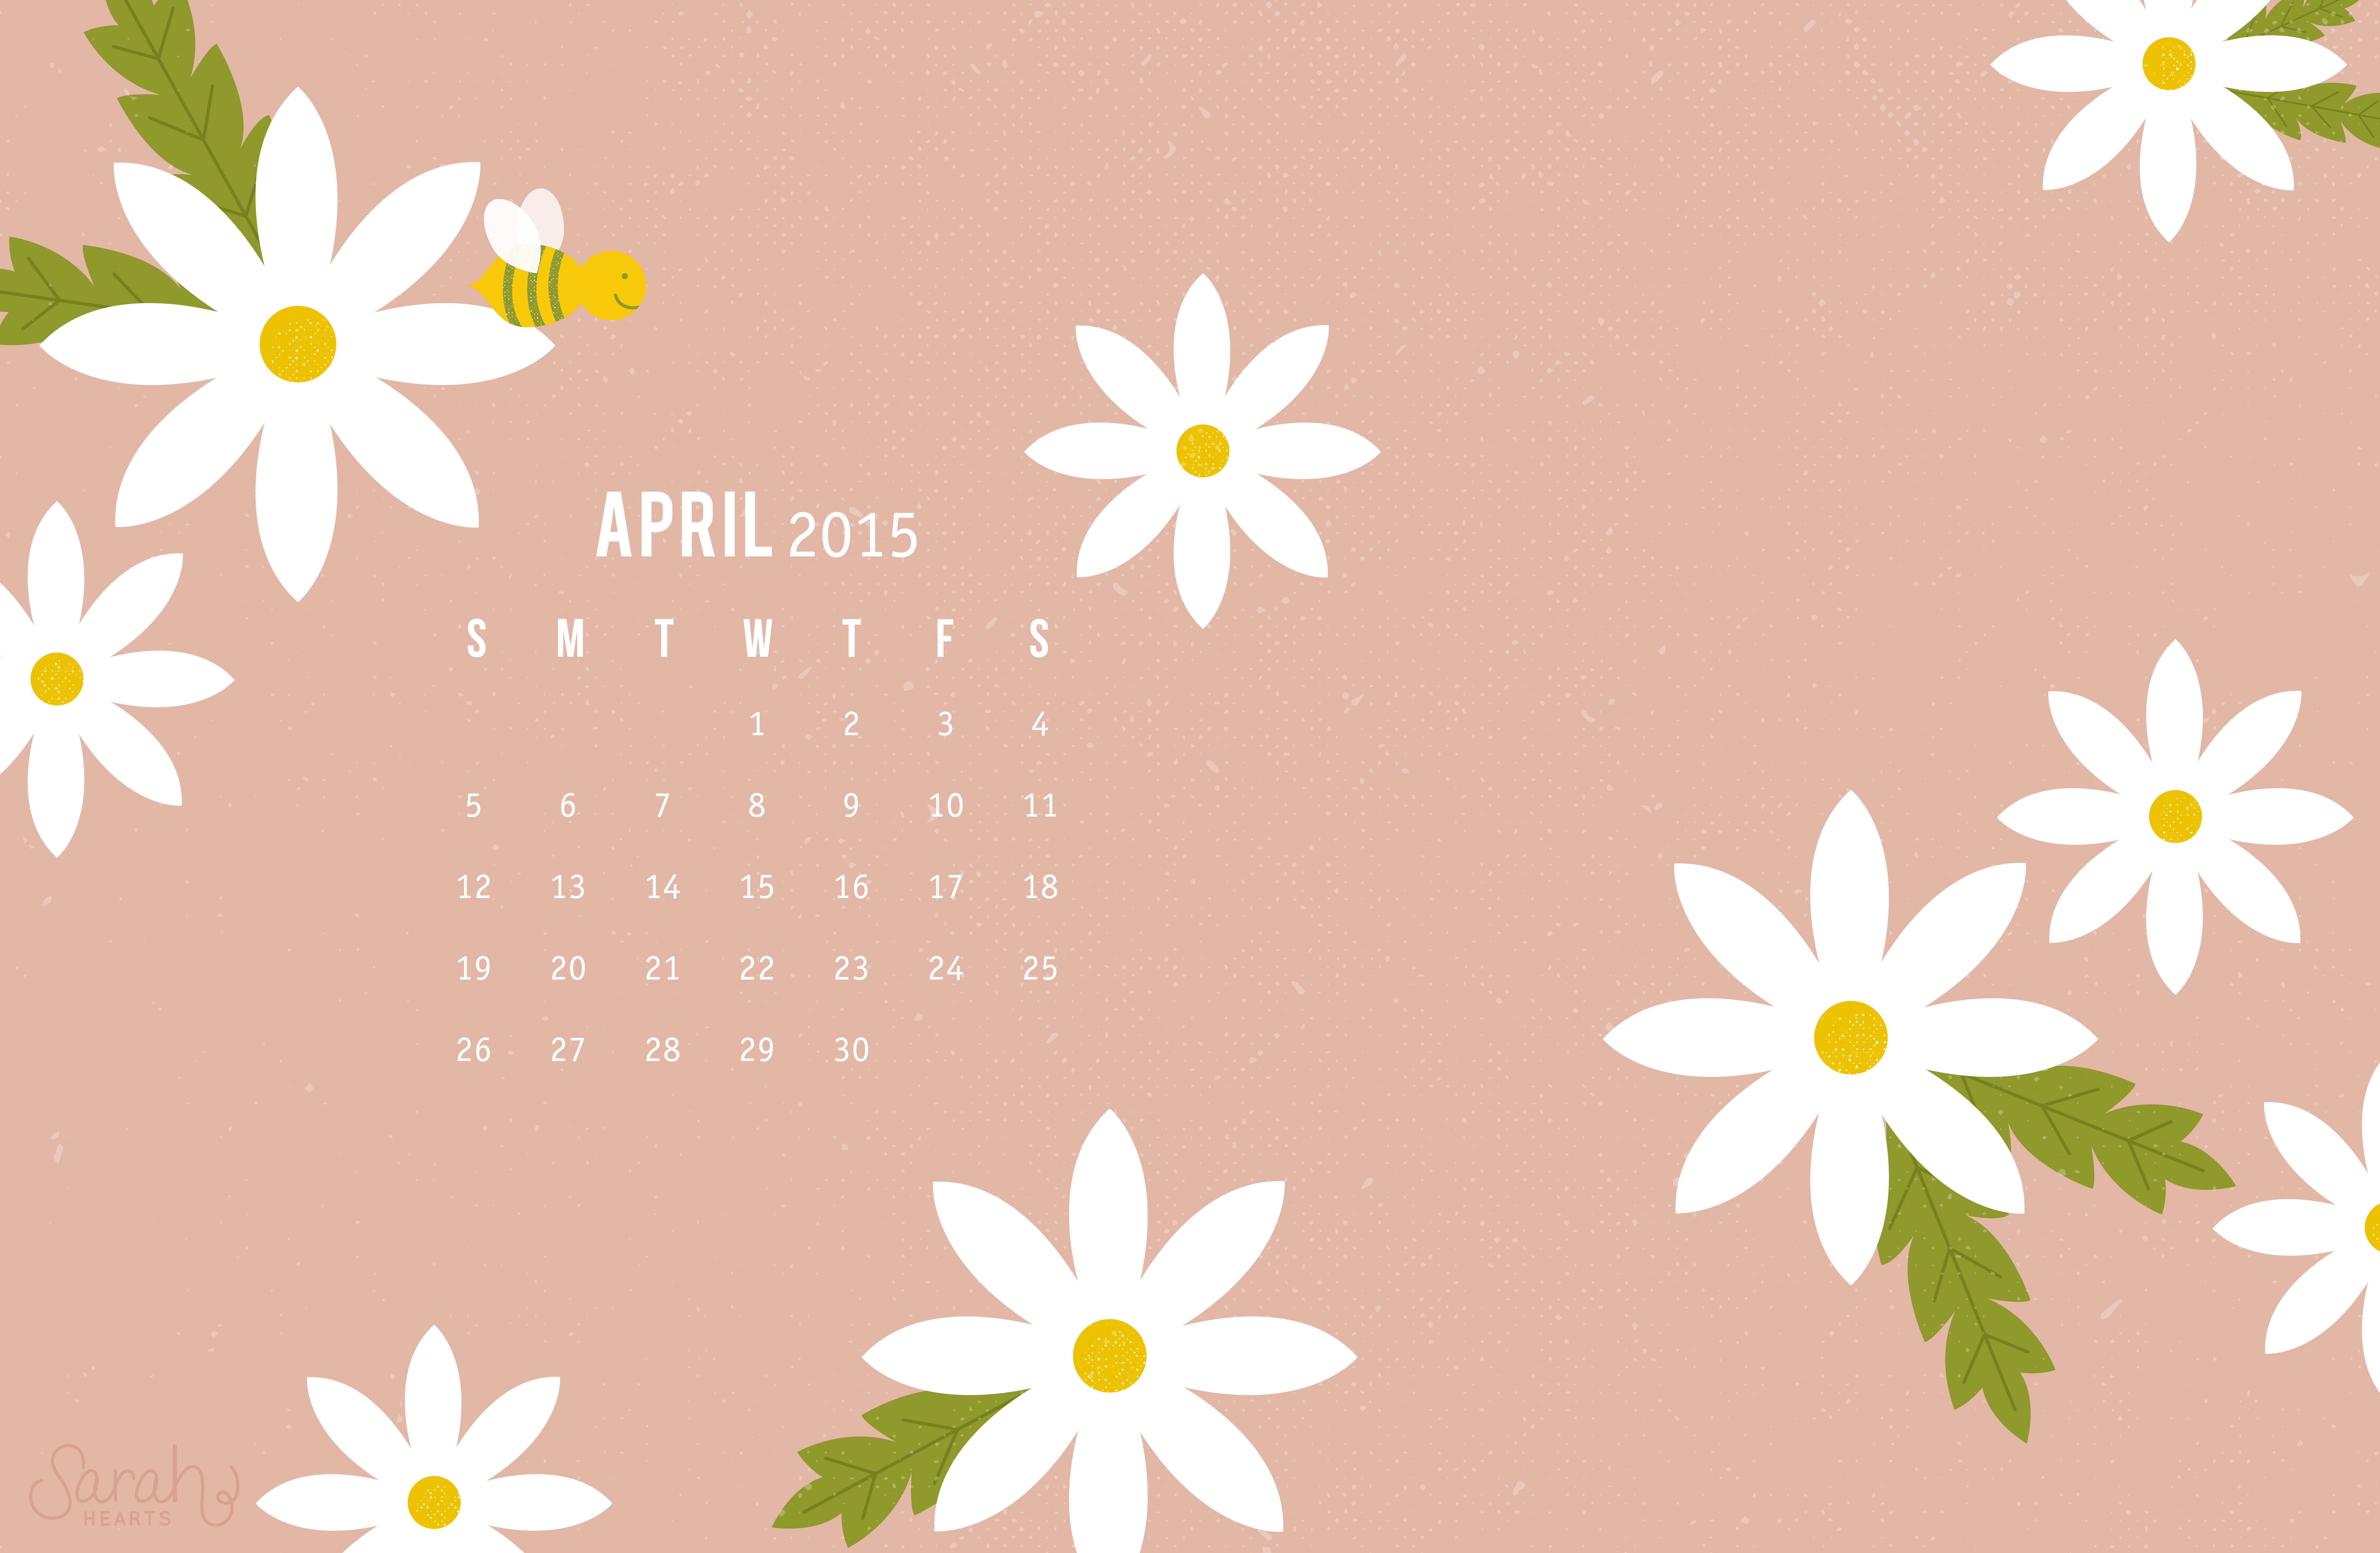 April 2015 Calendar Wallpaper - Sarah Hearts